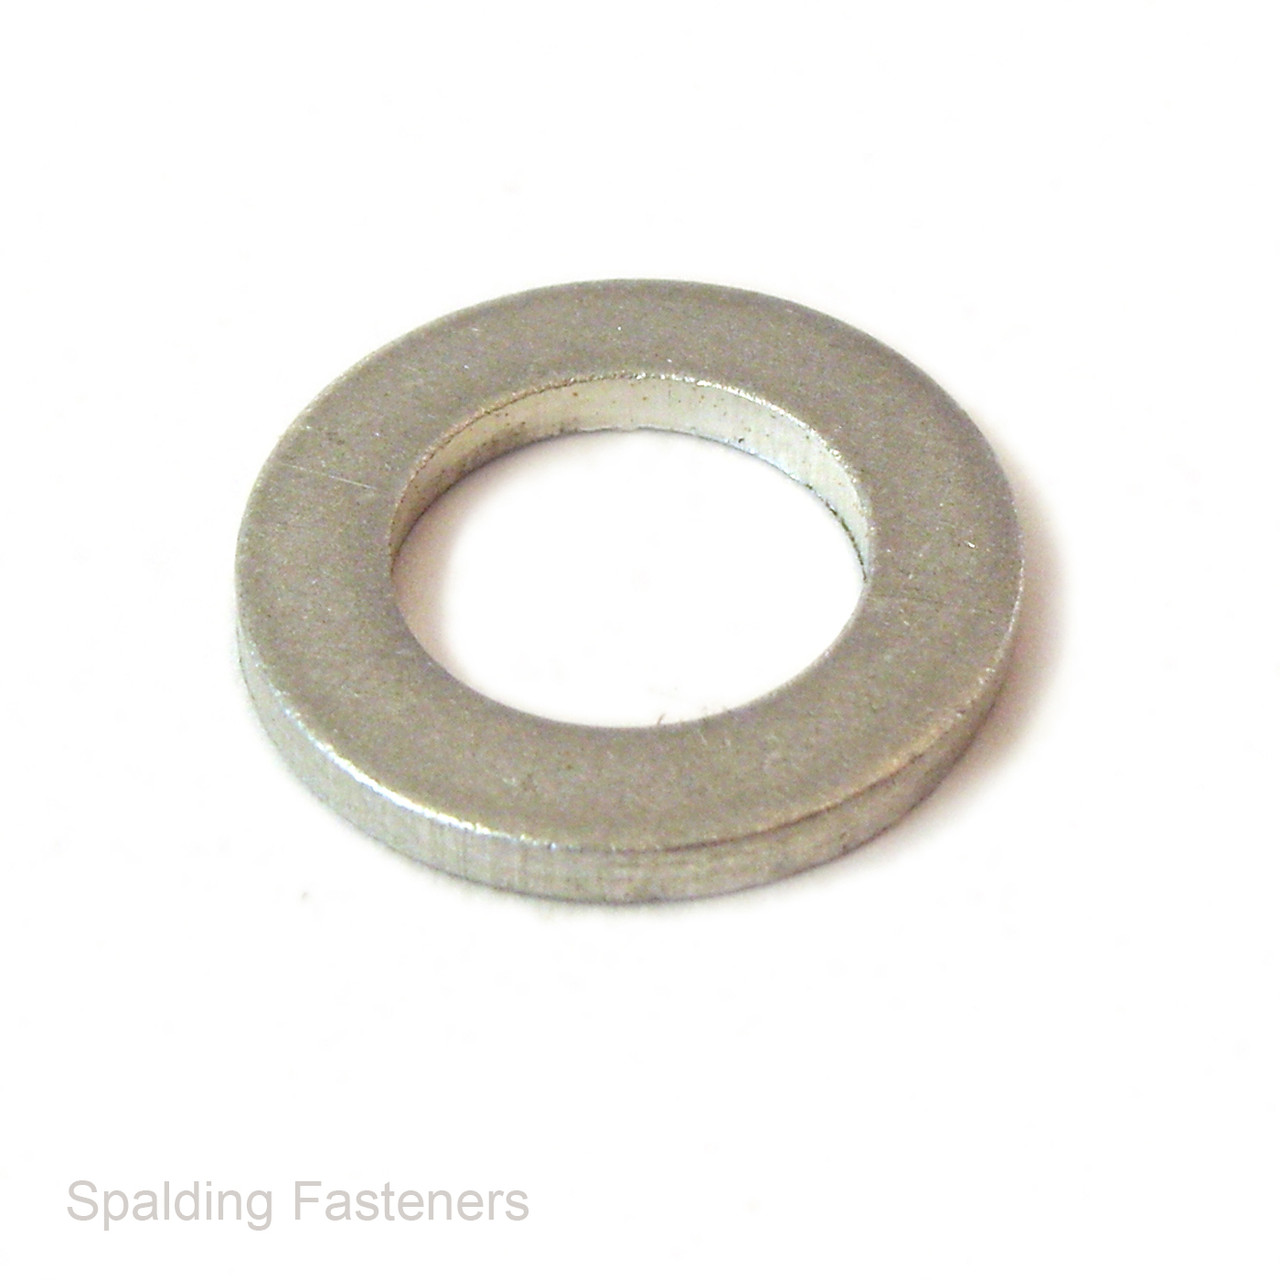 110 Assorted Metric Aluminium Flat Sealing Washers - M14 to M22